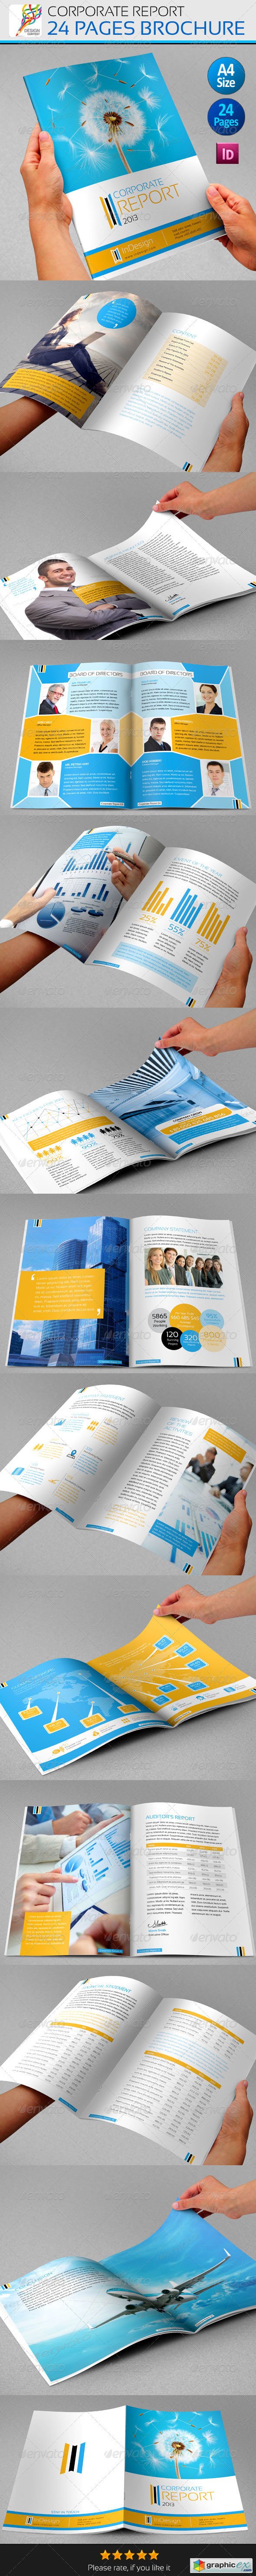 Corporate Annual Report / Brochure